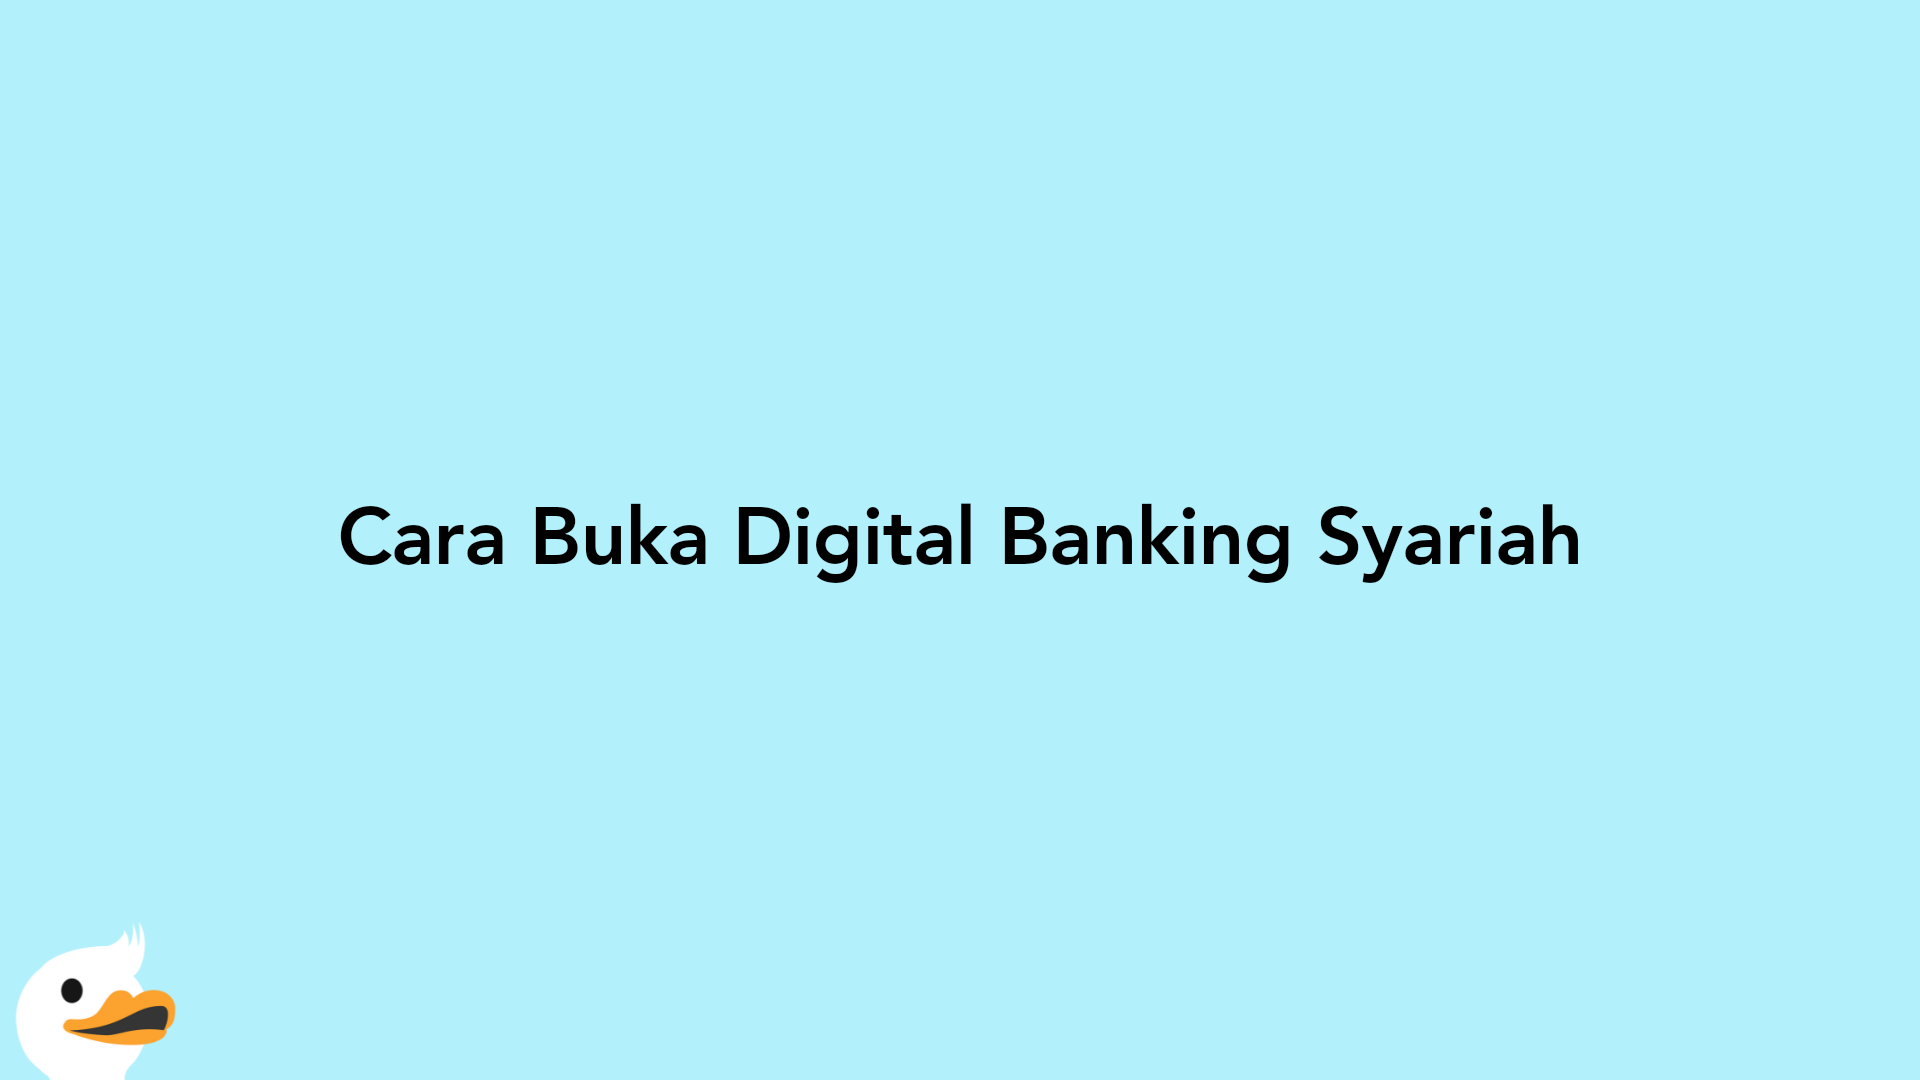 Cara Buka Digital Banking Syariah